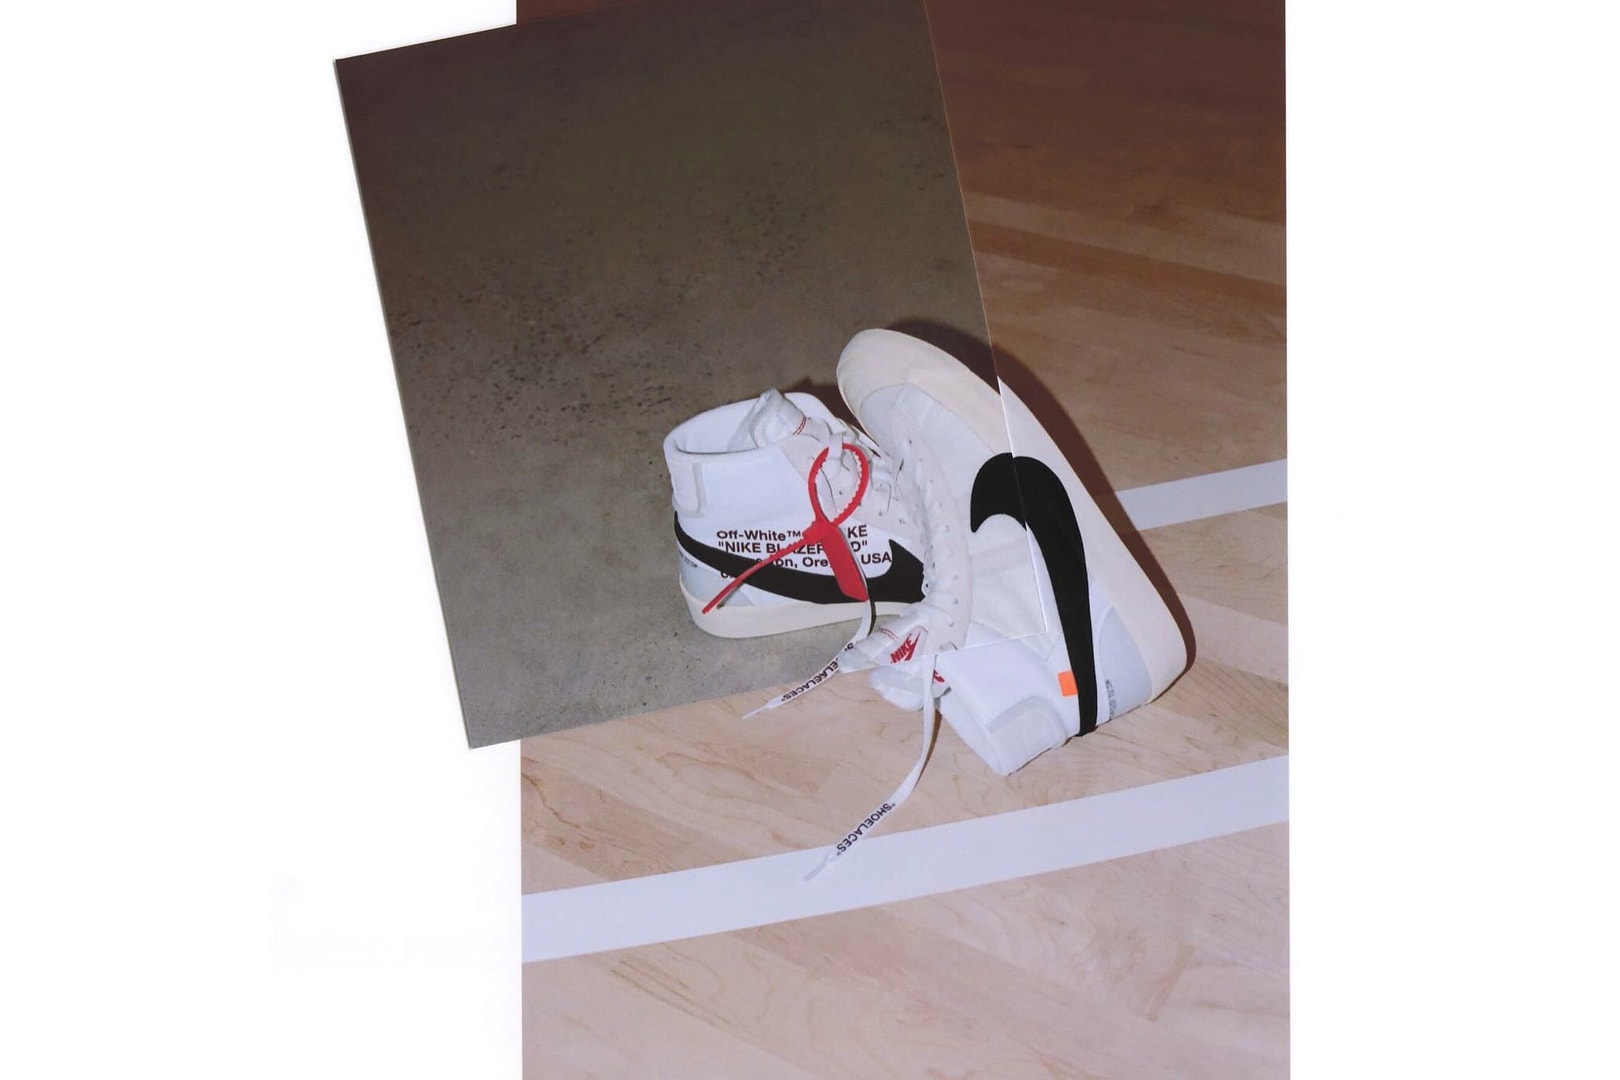 Virgil Abloh Nike The Ten Collection Jordan Brand Raffle Raffles Locations Release Info Dates Drops Footwear Sneakers Shoes Air Jordan 1 Blazer Air Max 90 97 VaporMax Hyperdunk 2017 Zoomfly Presto Air Force 1